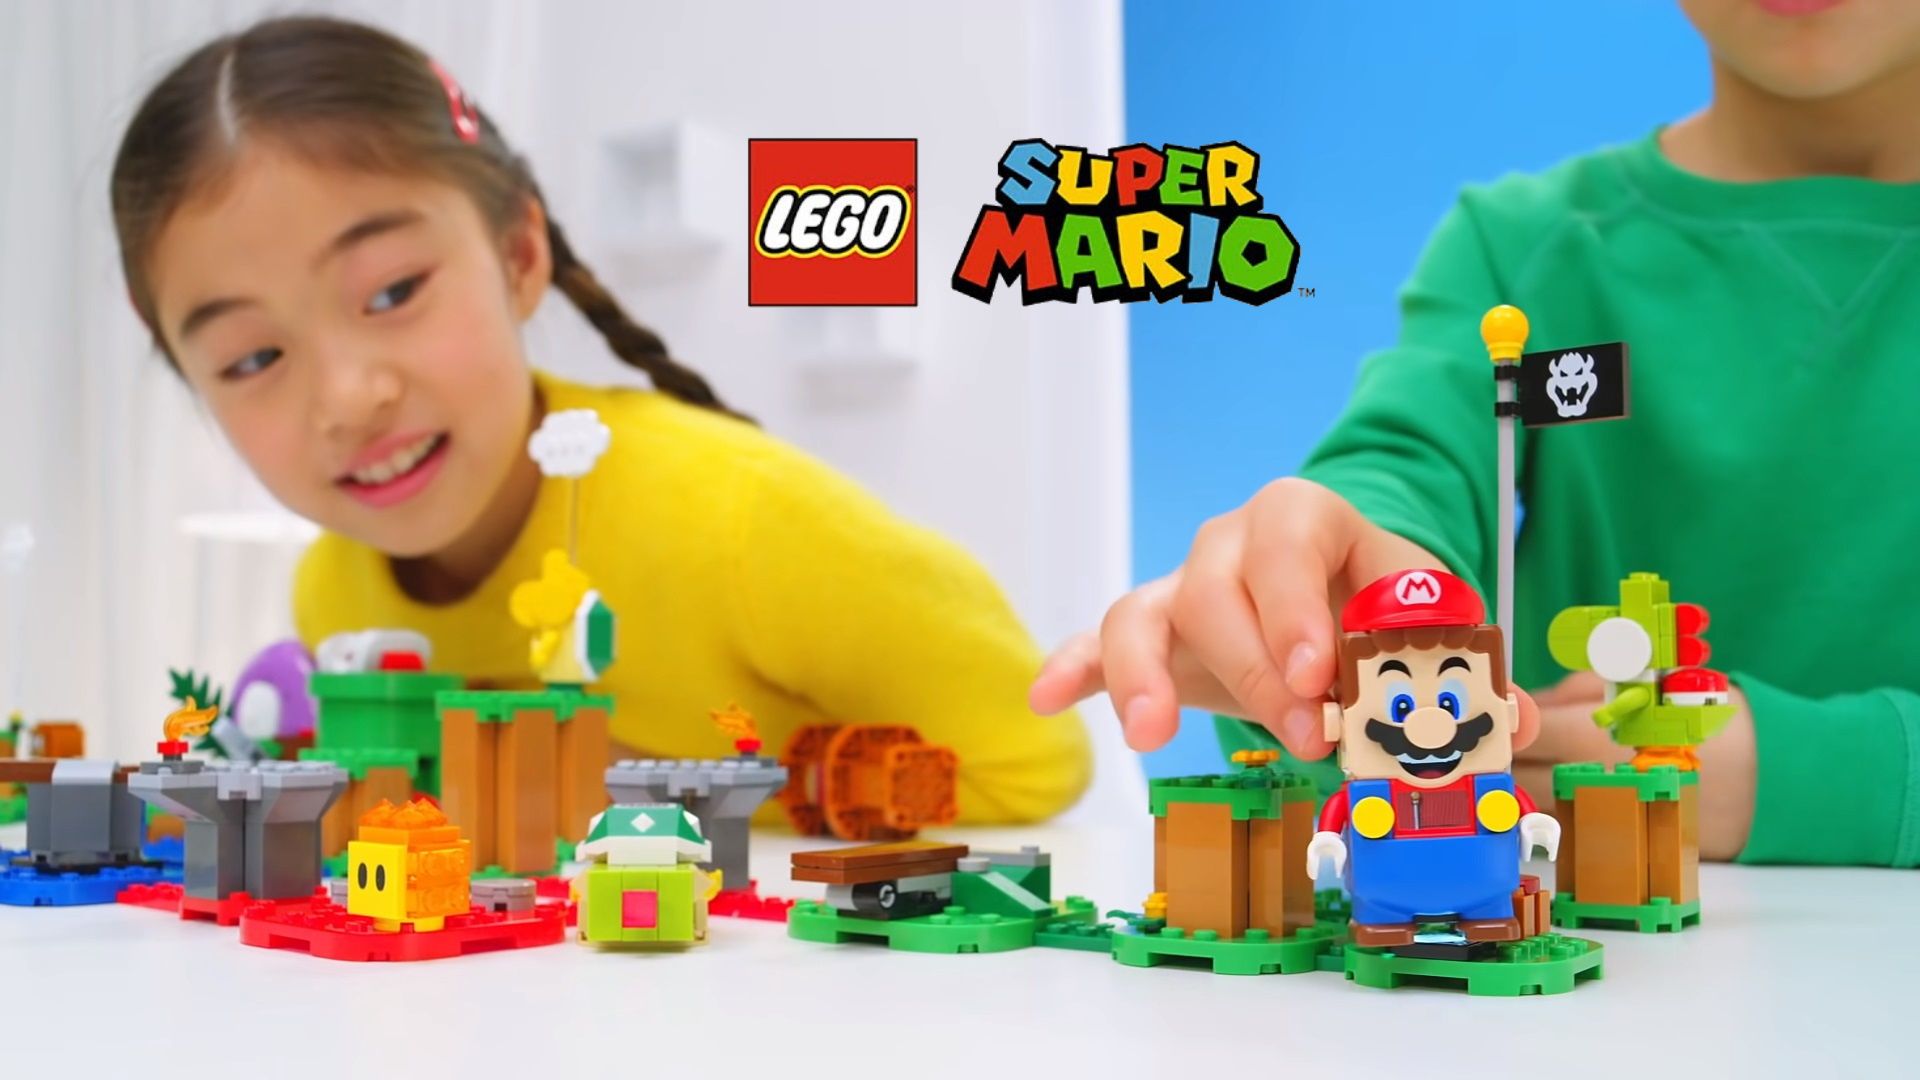 LEGO Super Mario ของเล่นต่อบล็อคสุดล้ำ เชื่อมกับแอปมือถือเพื่อสร้างด่าน และเล่นได้เหมือนเกมจริงๆ